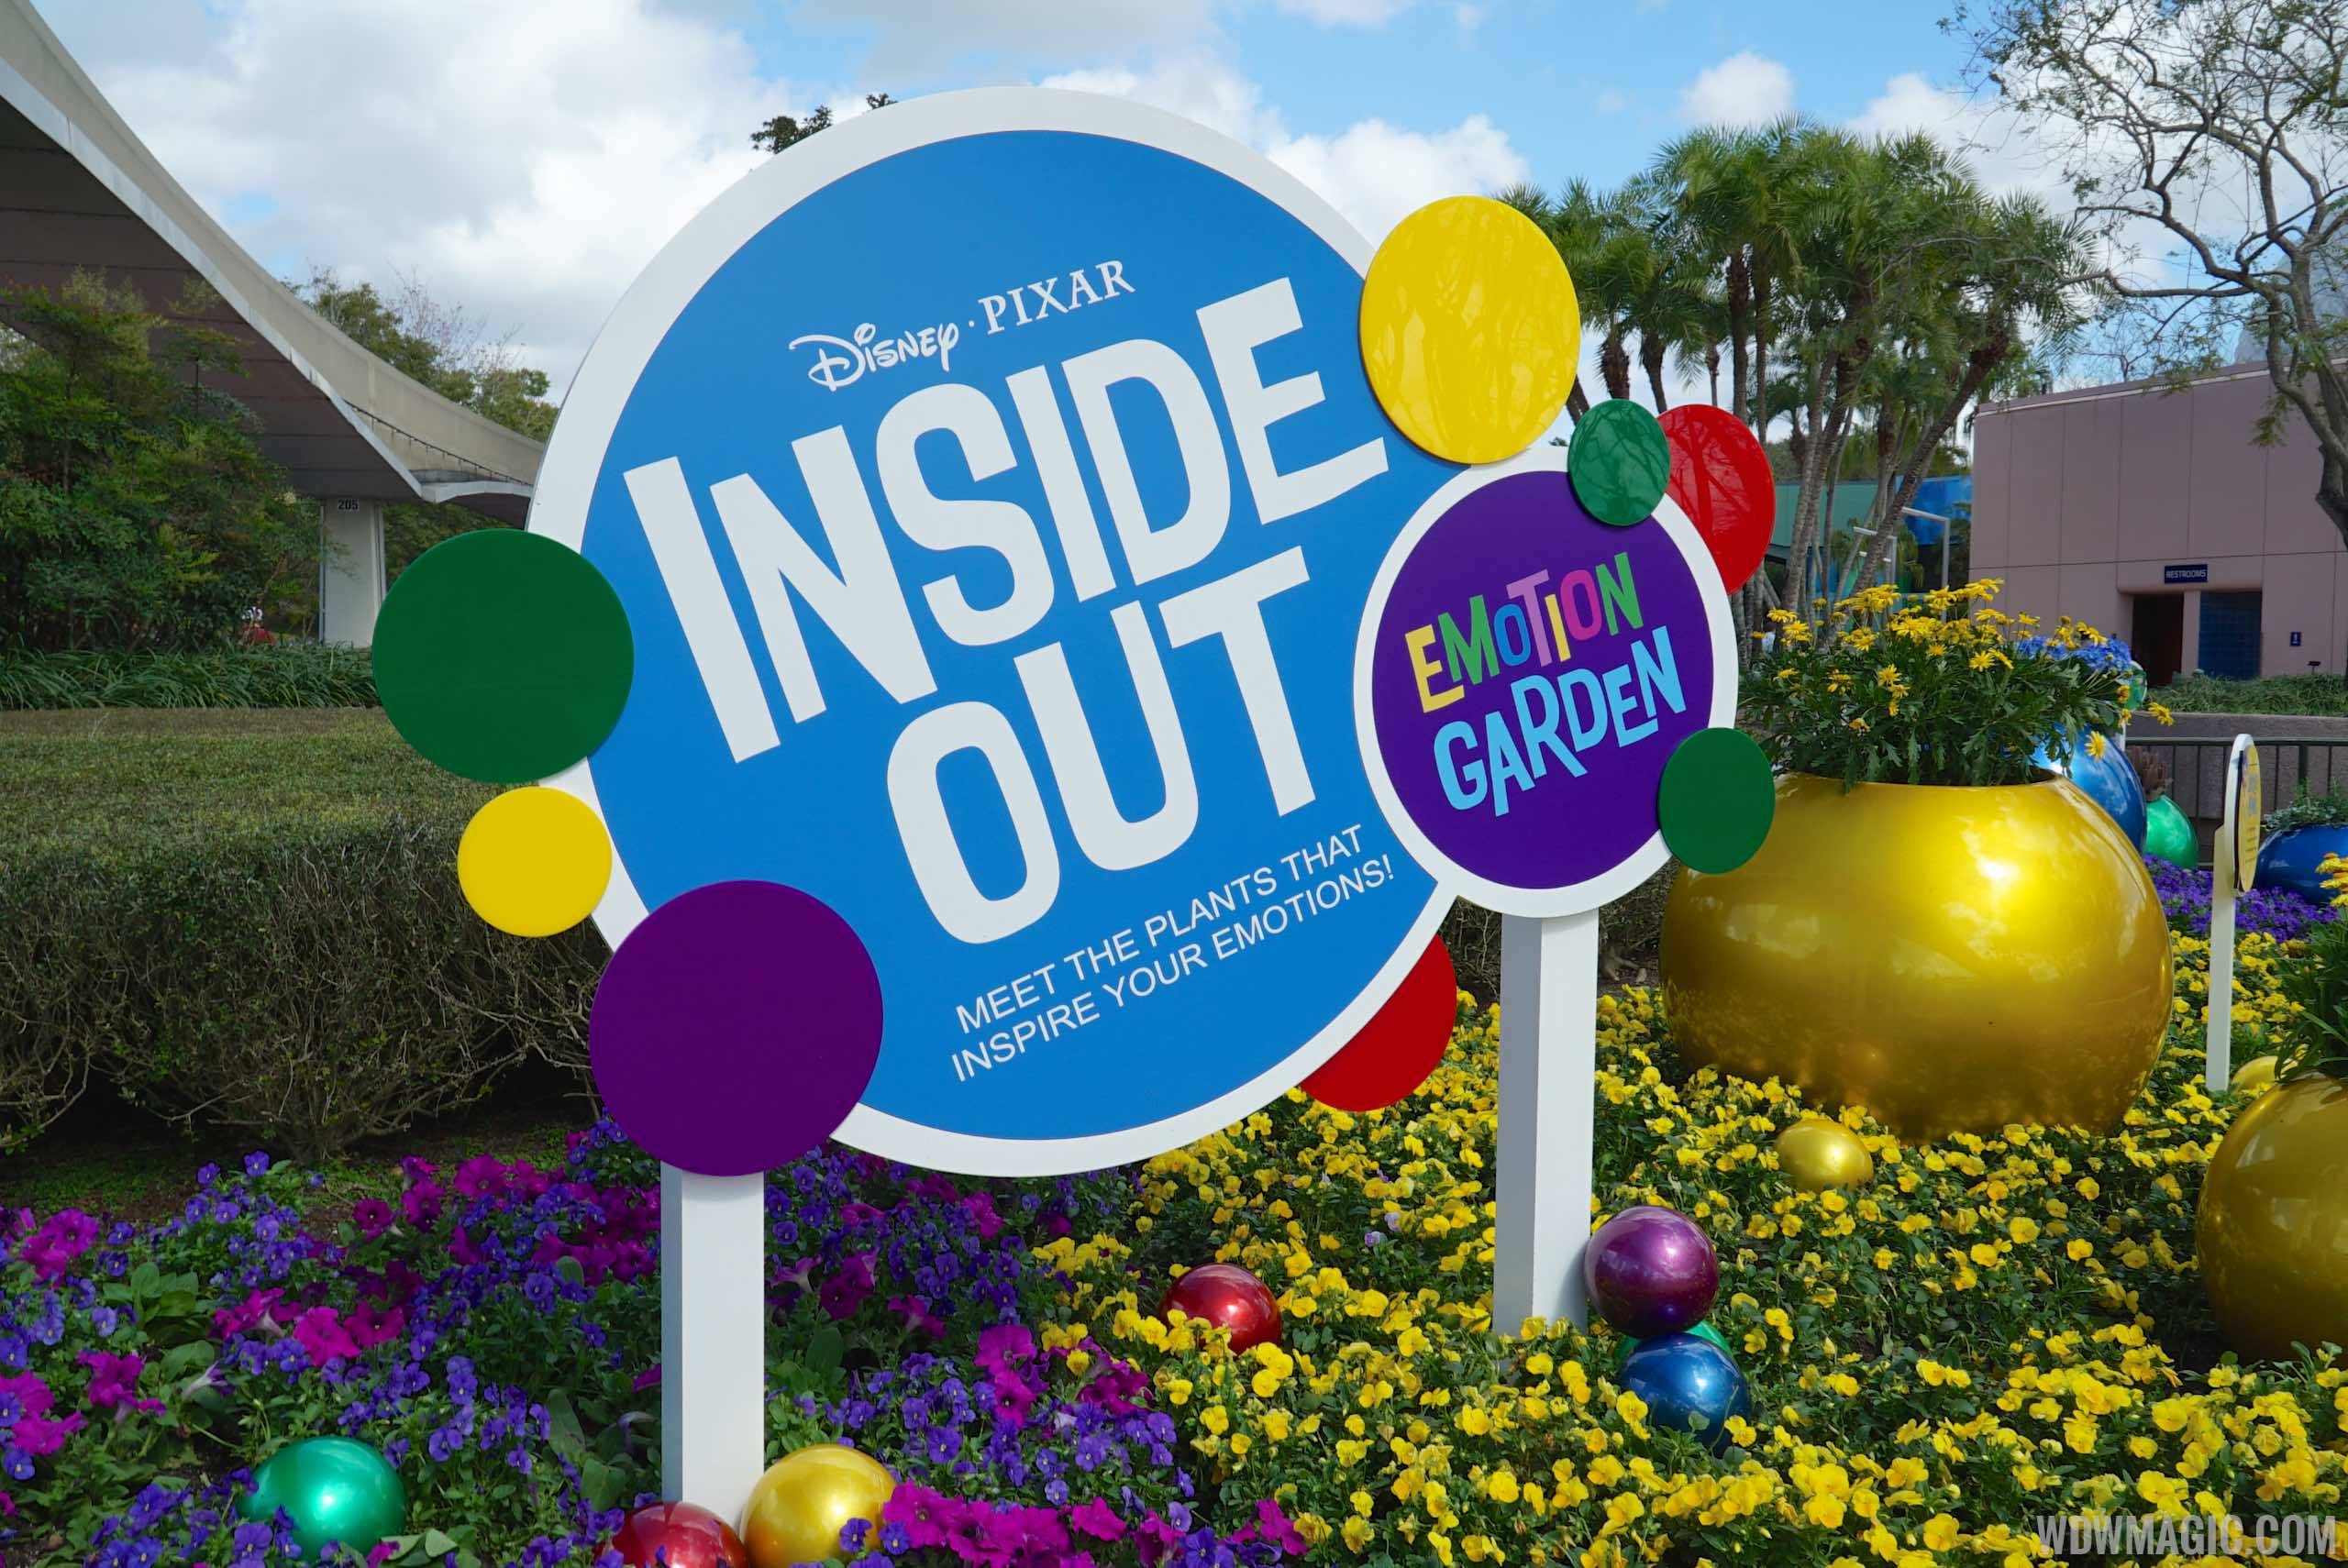 2015 Epcot Flower and Garden Festival - Inside Out Garden